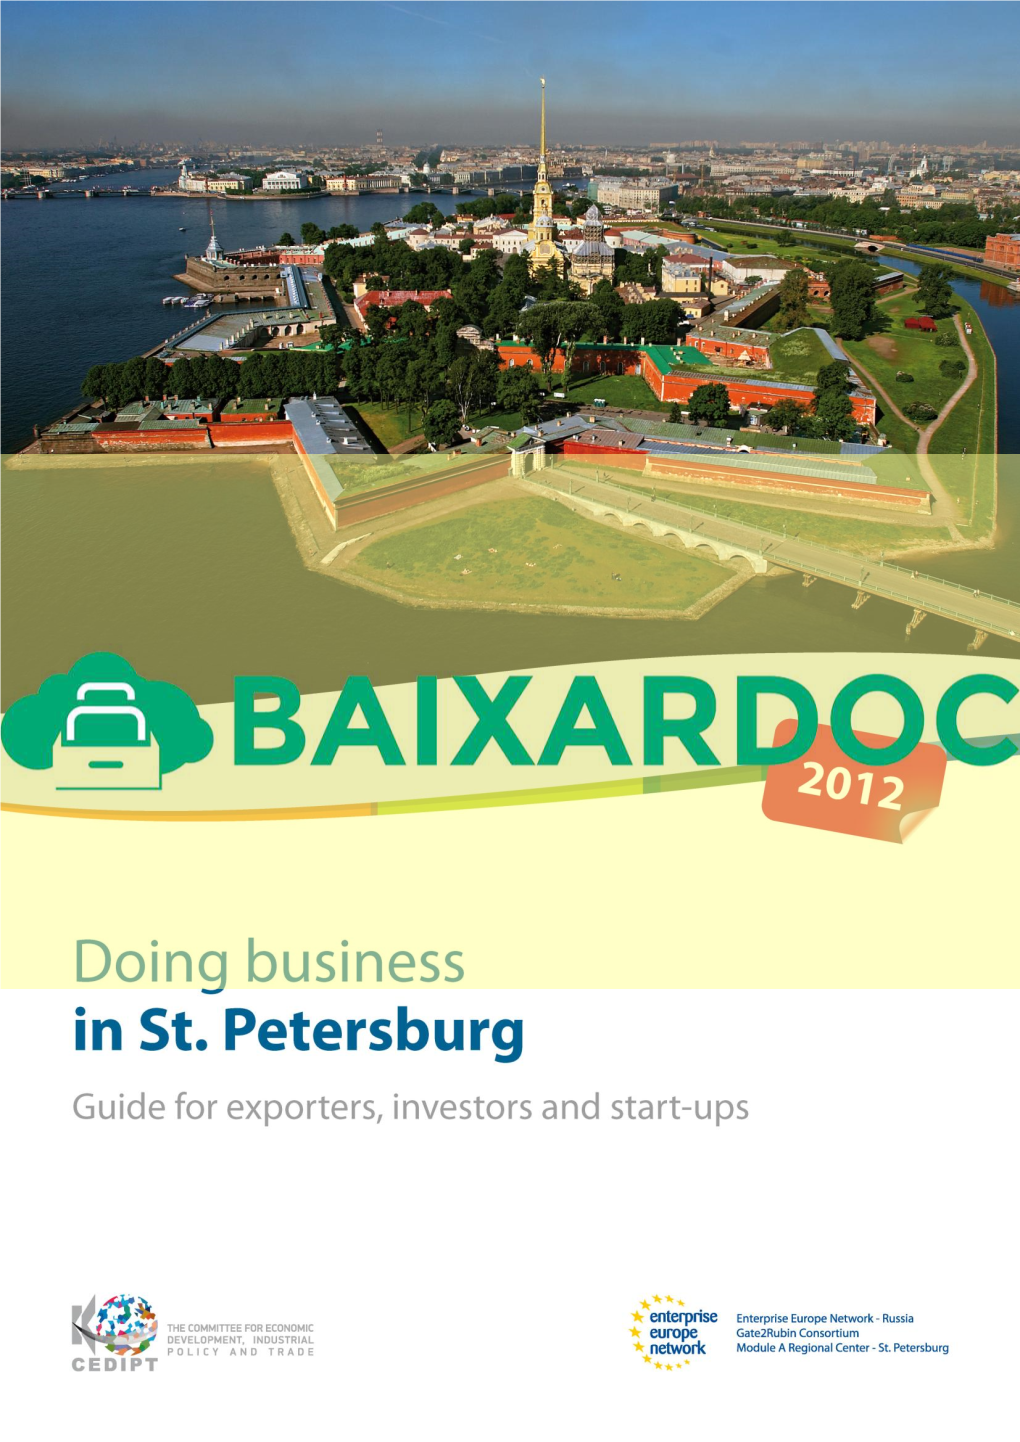 In St. Petersburg 2 Enterprise Europe Network - Russia, Module a Regional Center – St